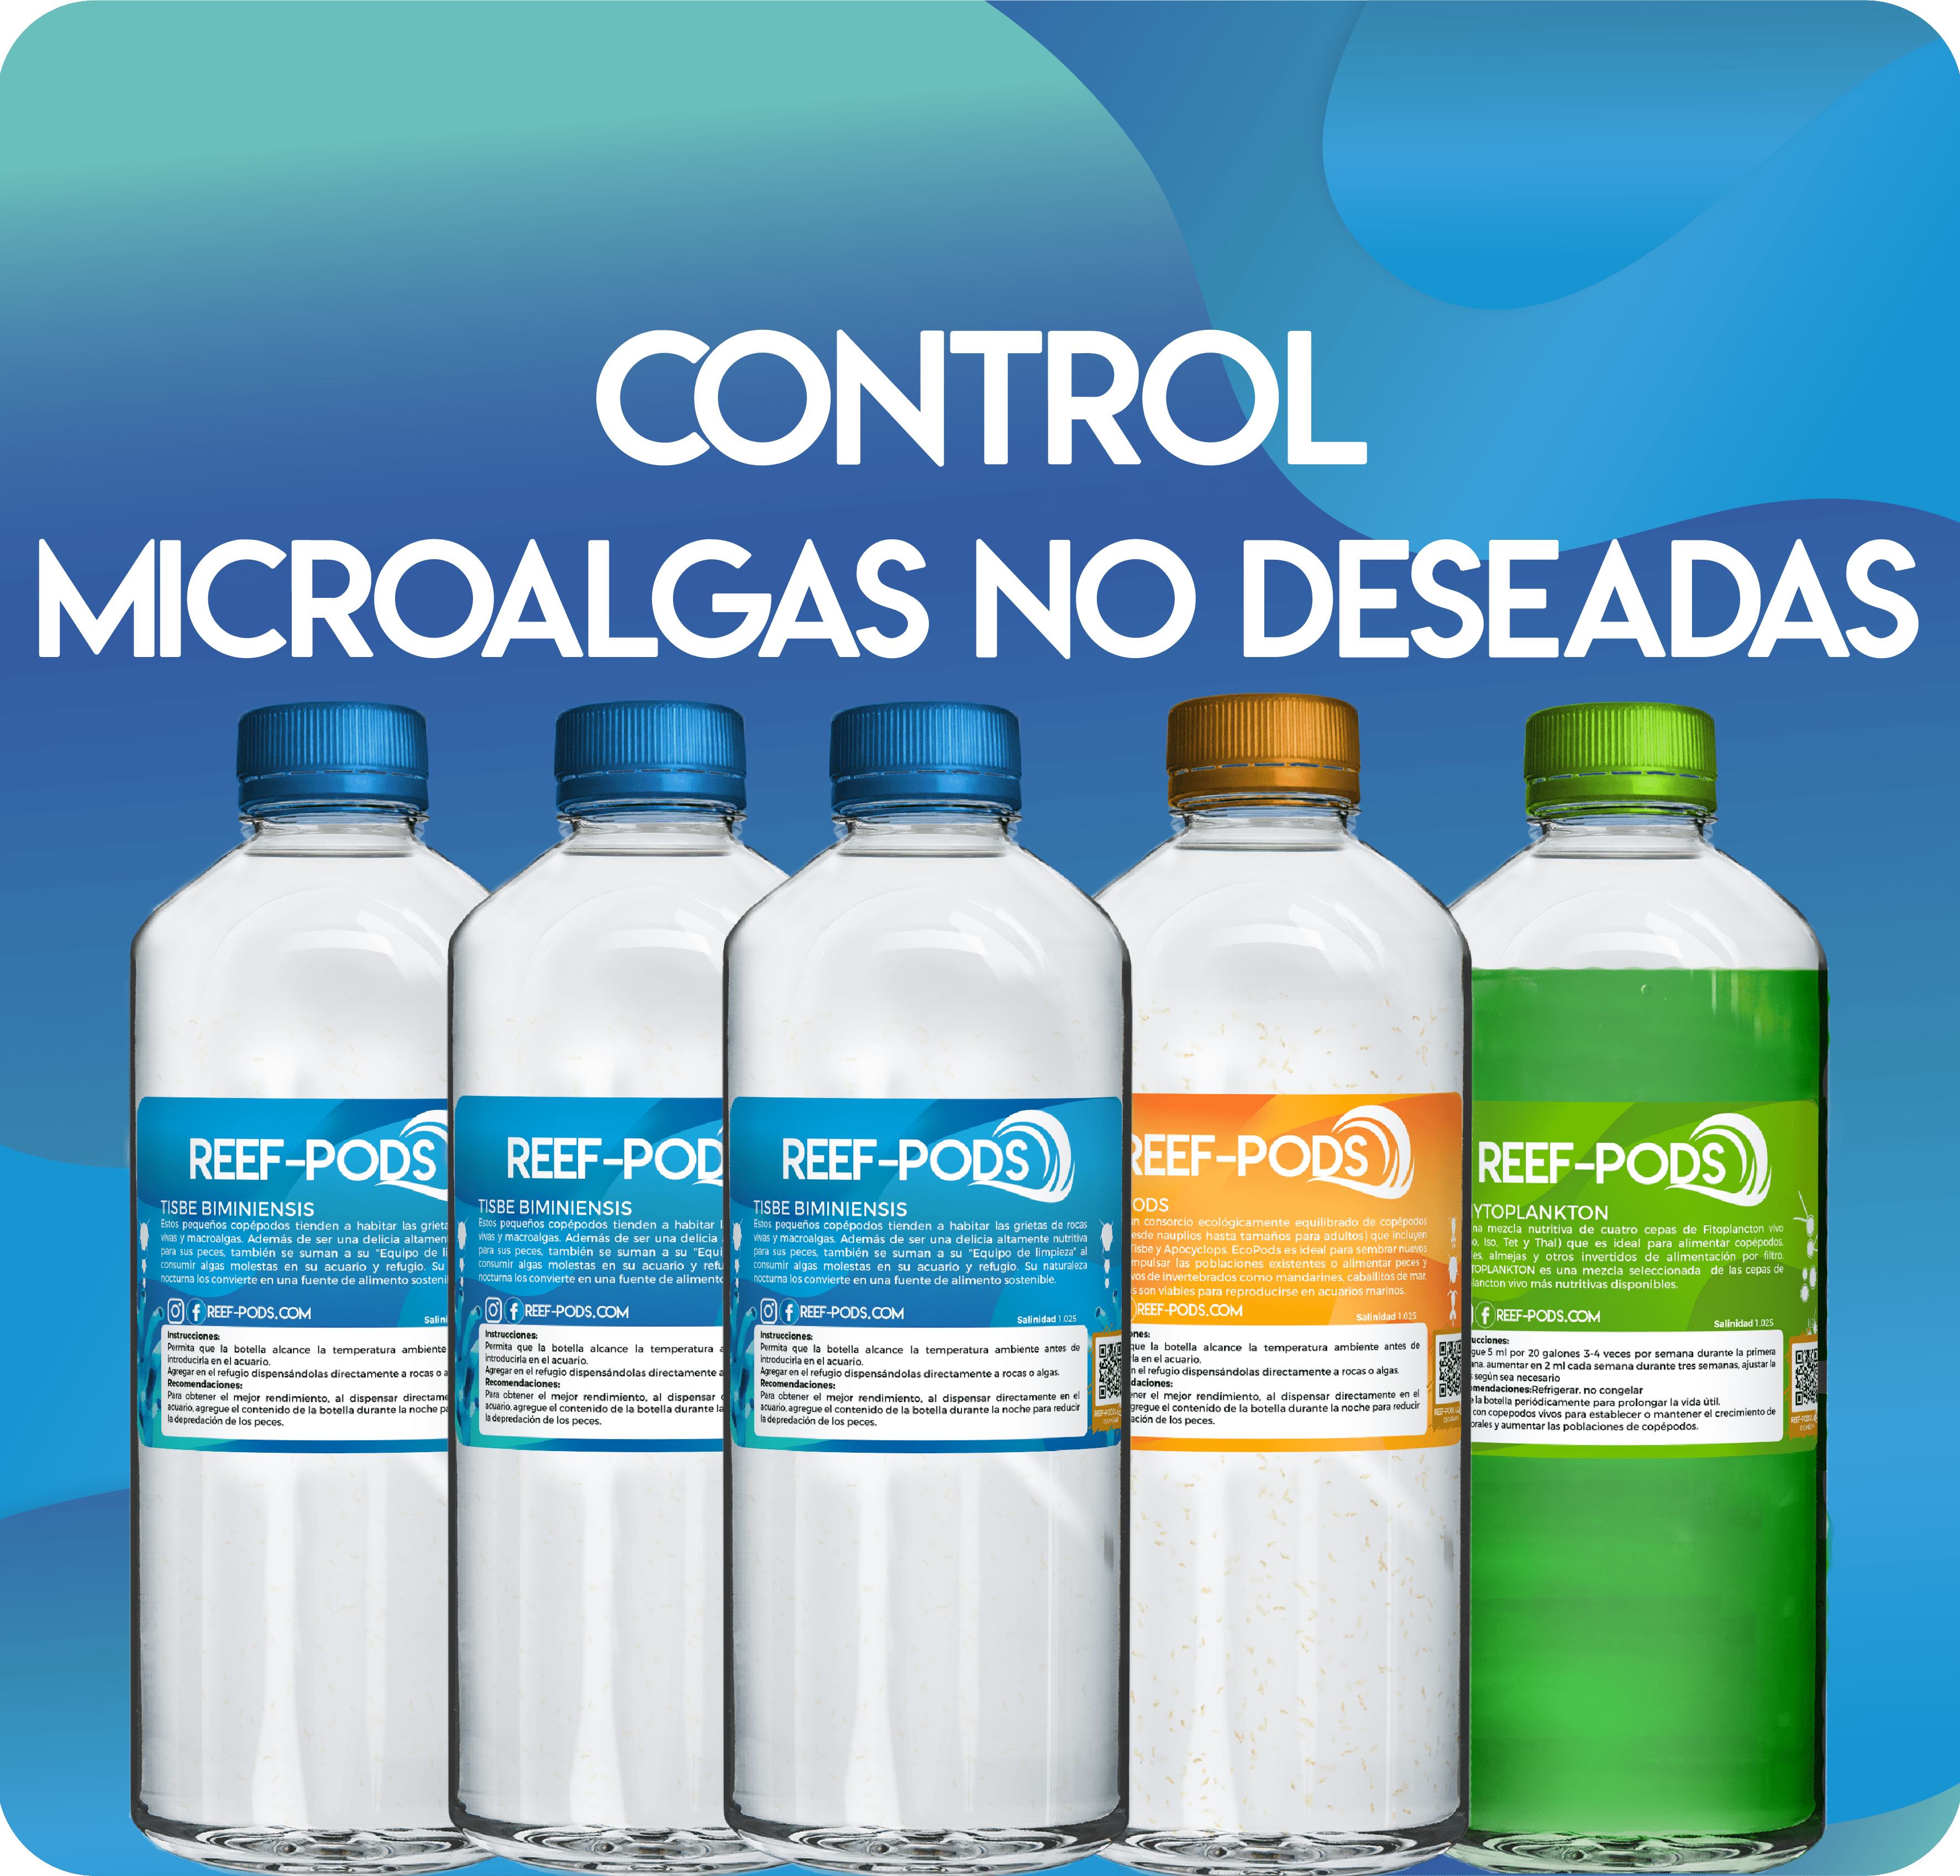 Copépodos Control de Microalgas No Deseadas pack